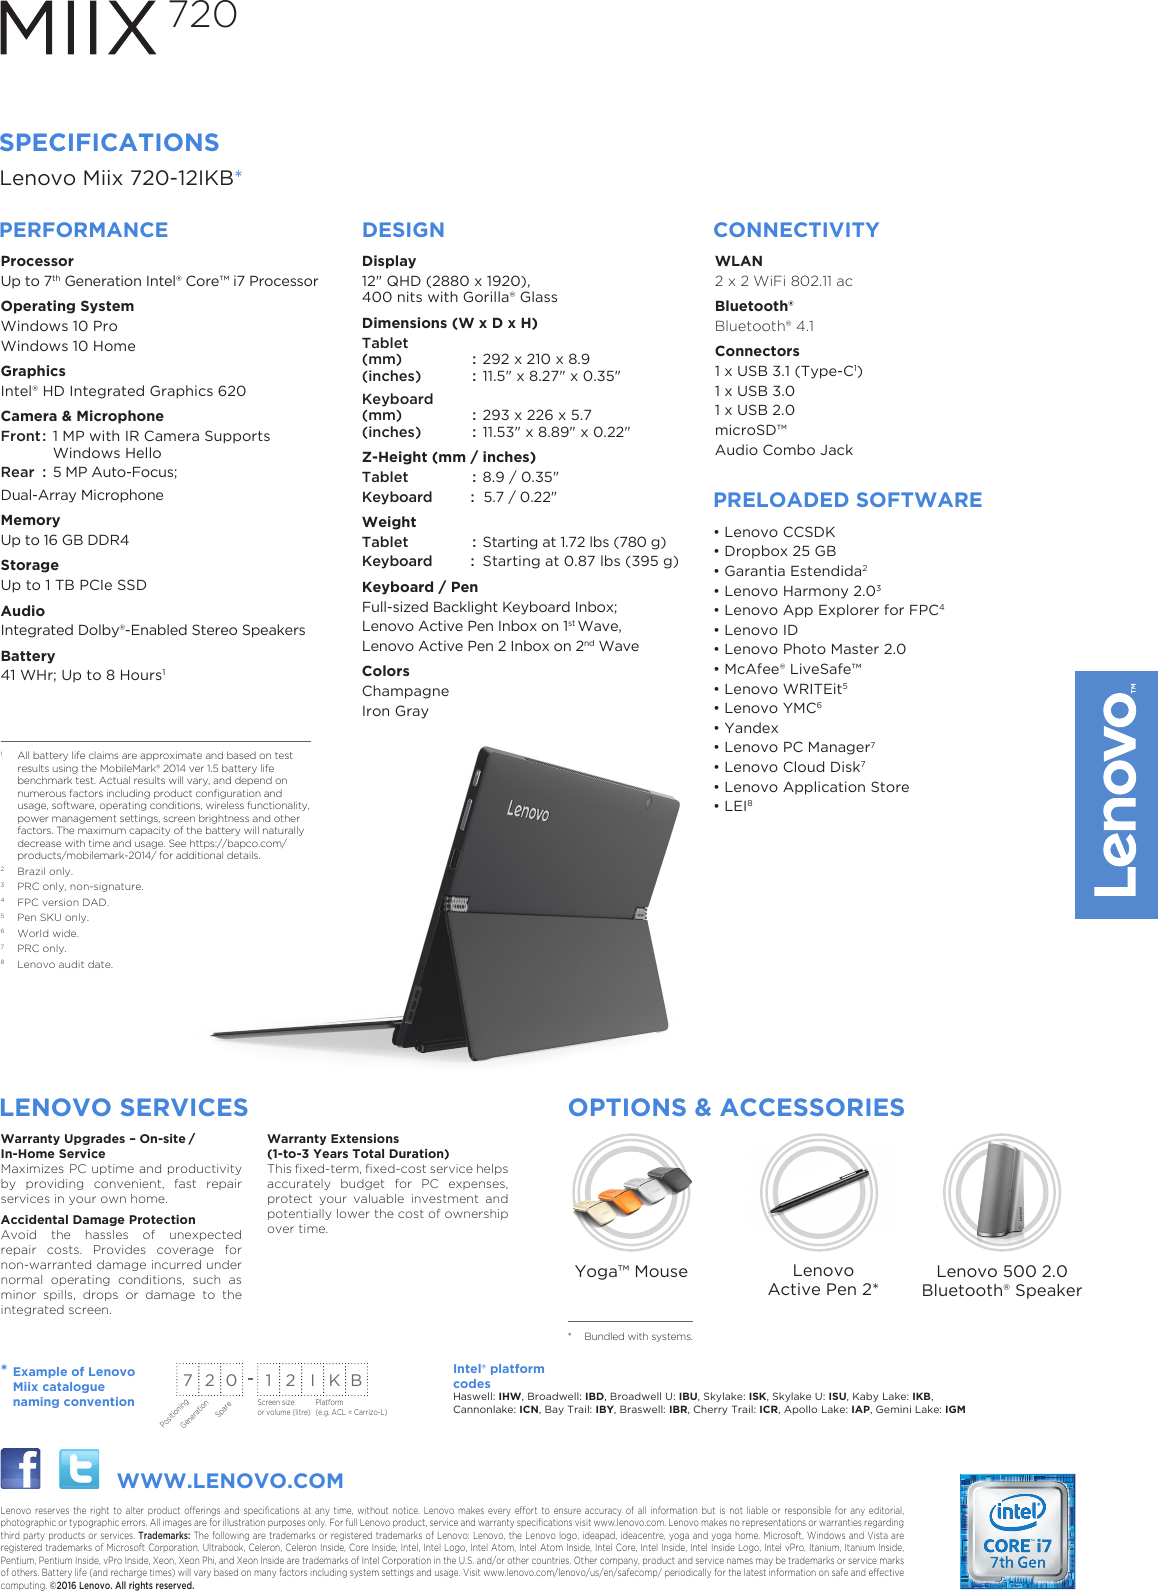 Page 2 of 2 - Lenovo Miix 720 Datasheet Miix-720-datasheet